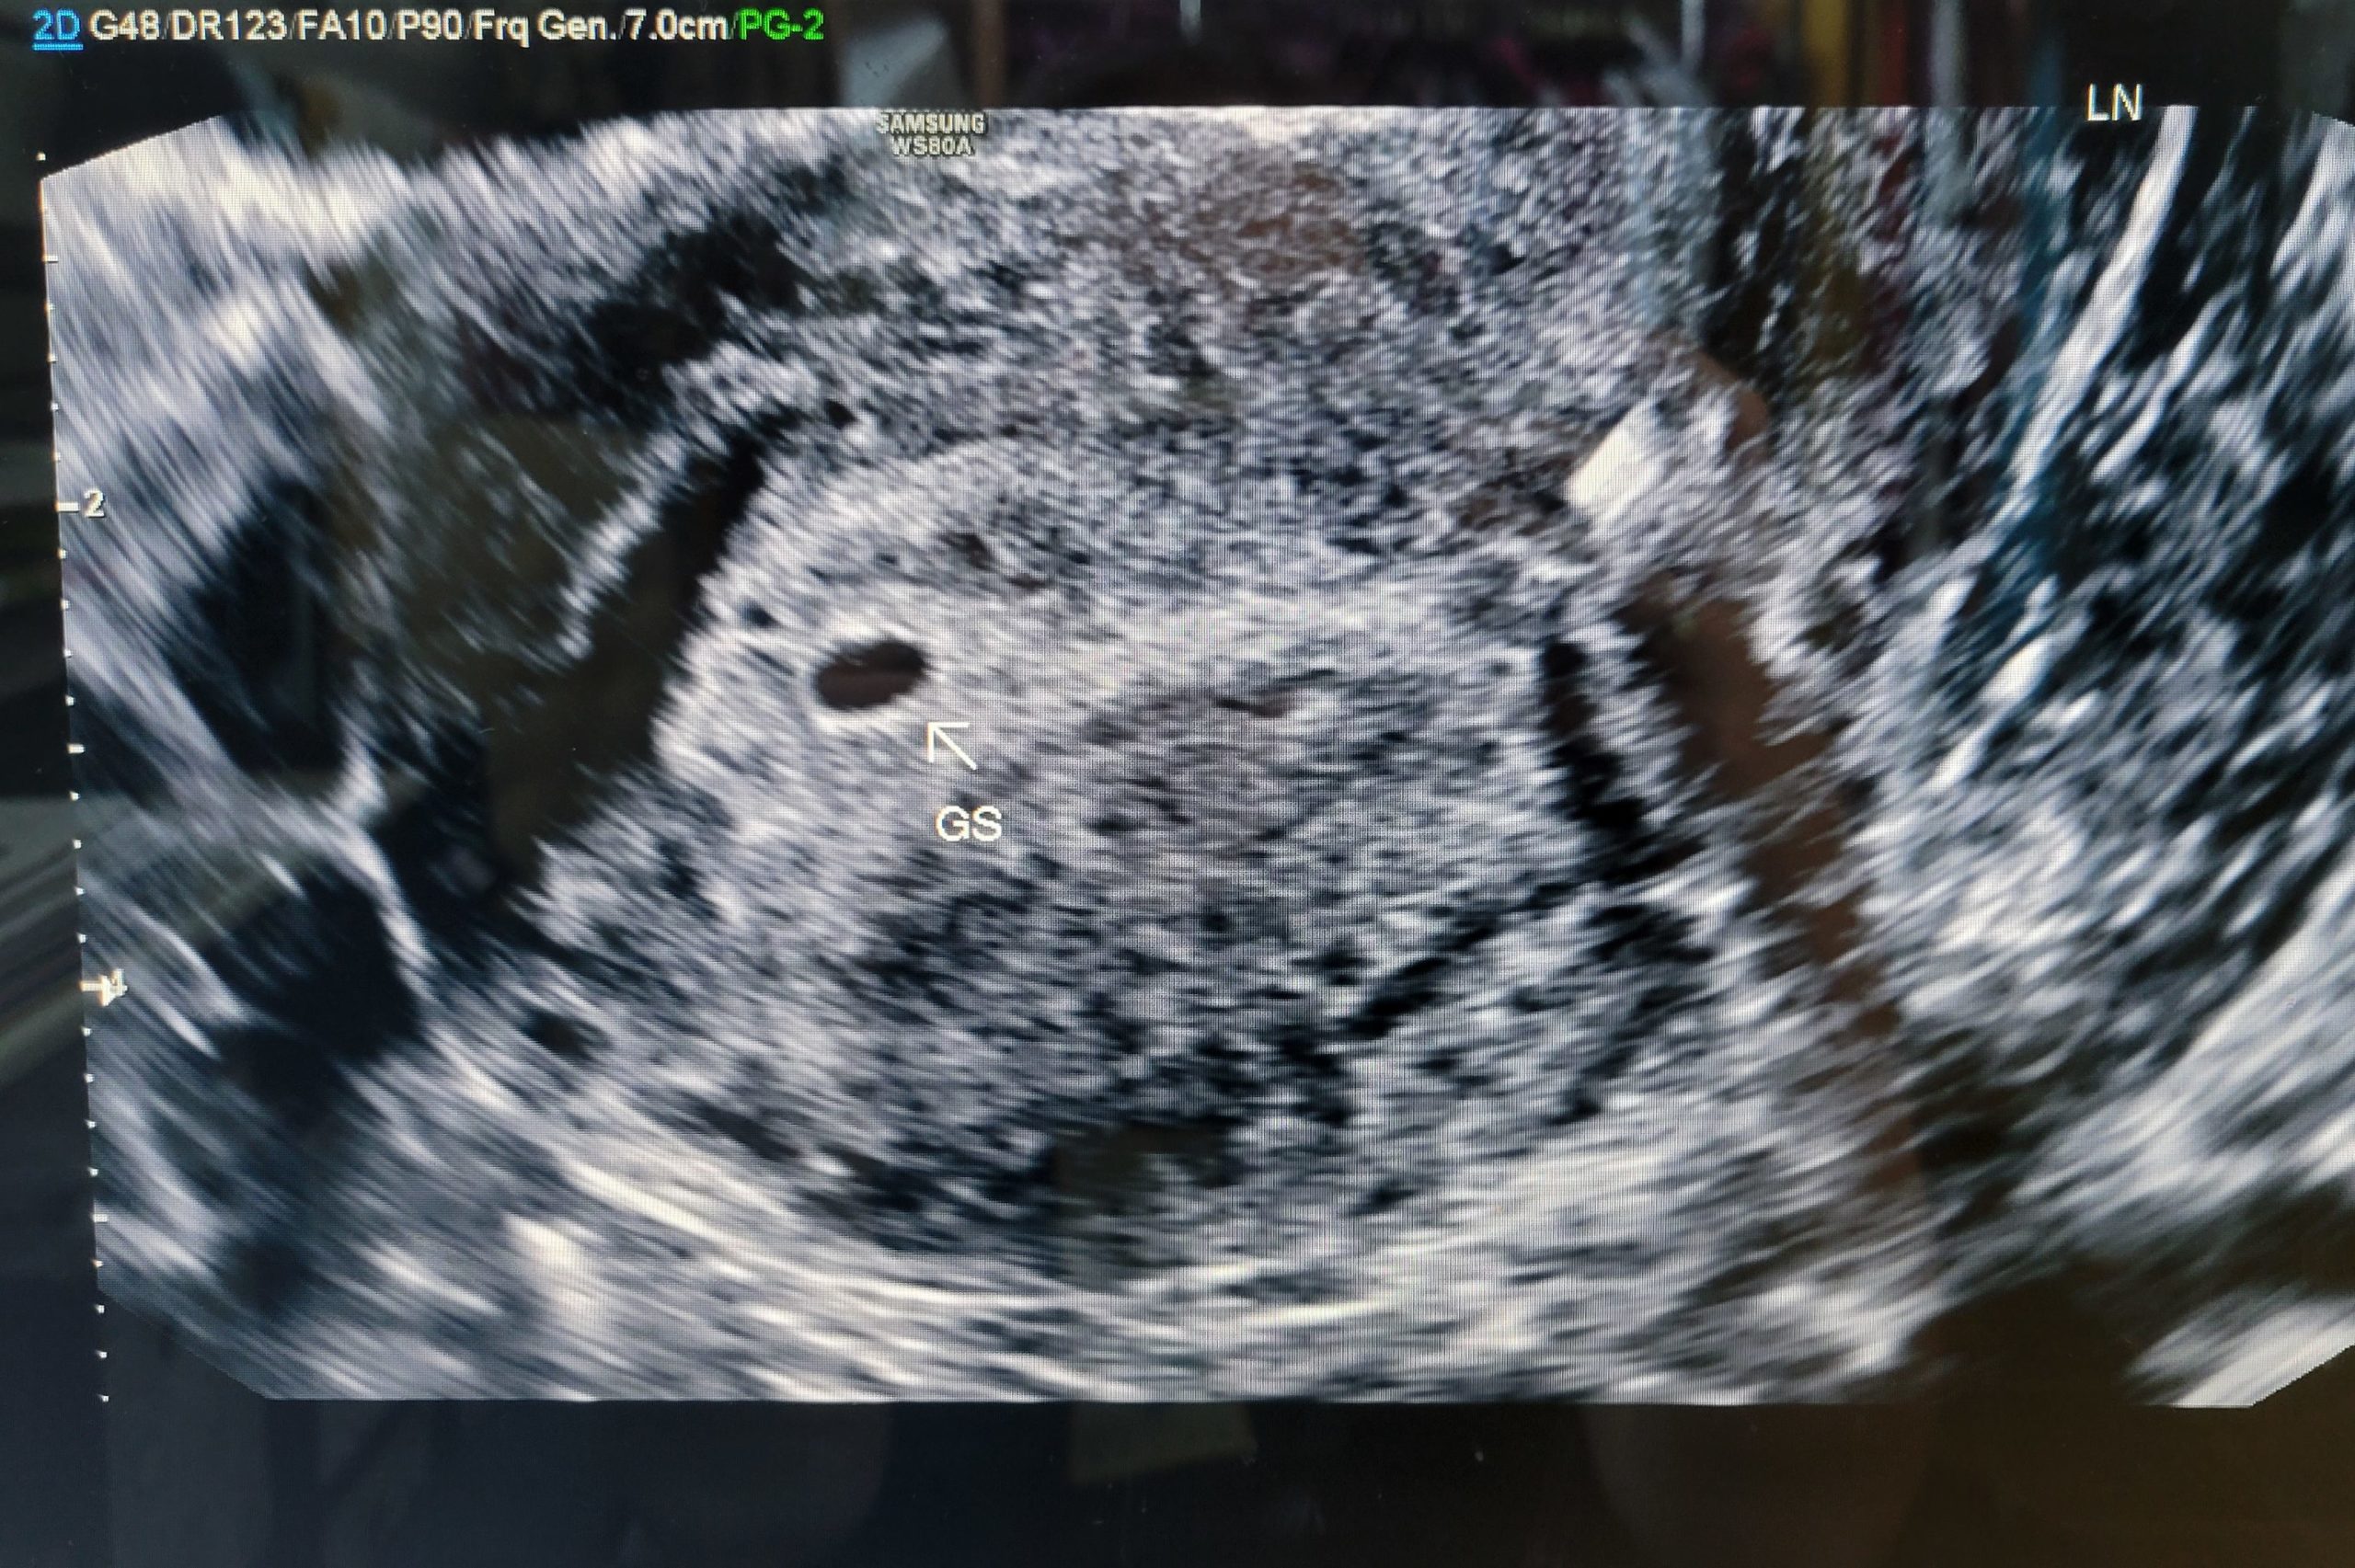 ultrasound of confirmed gestational sac at 5 weeks pregnant